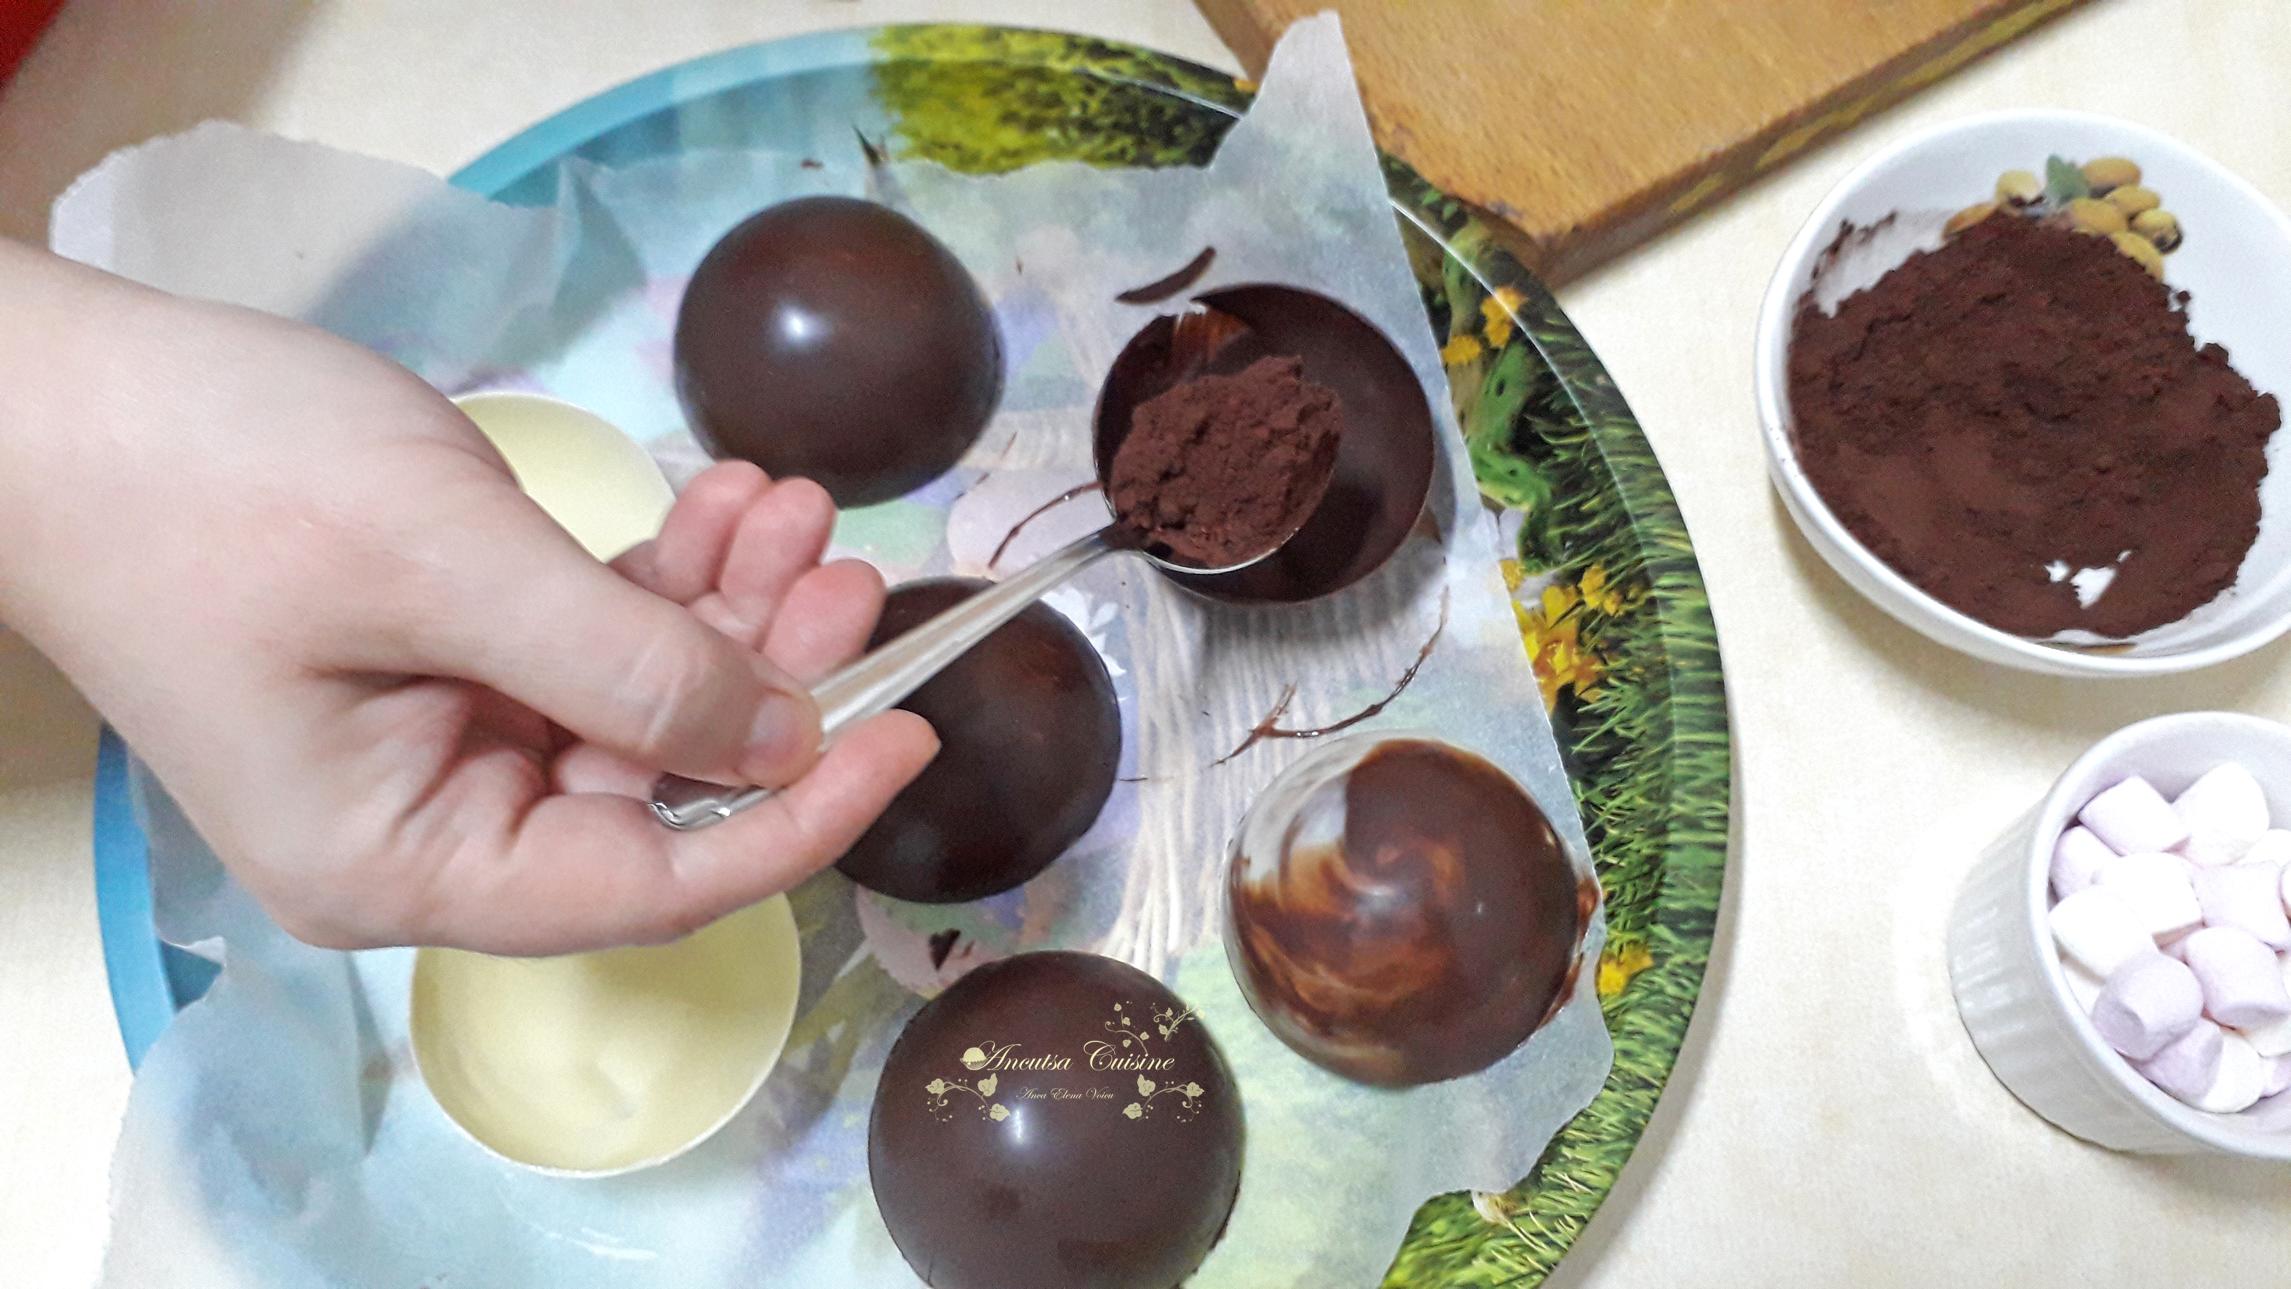 Desert sfere de ciocolata, umplute, pentru cacao calda